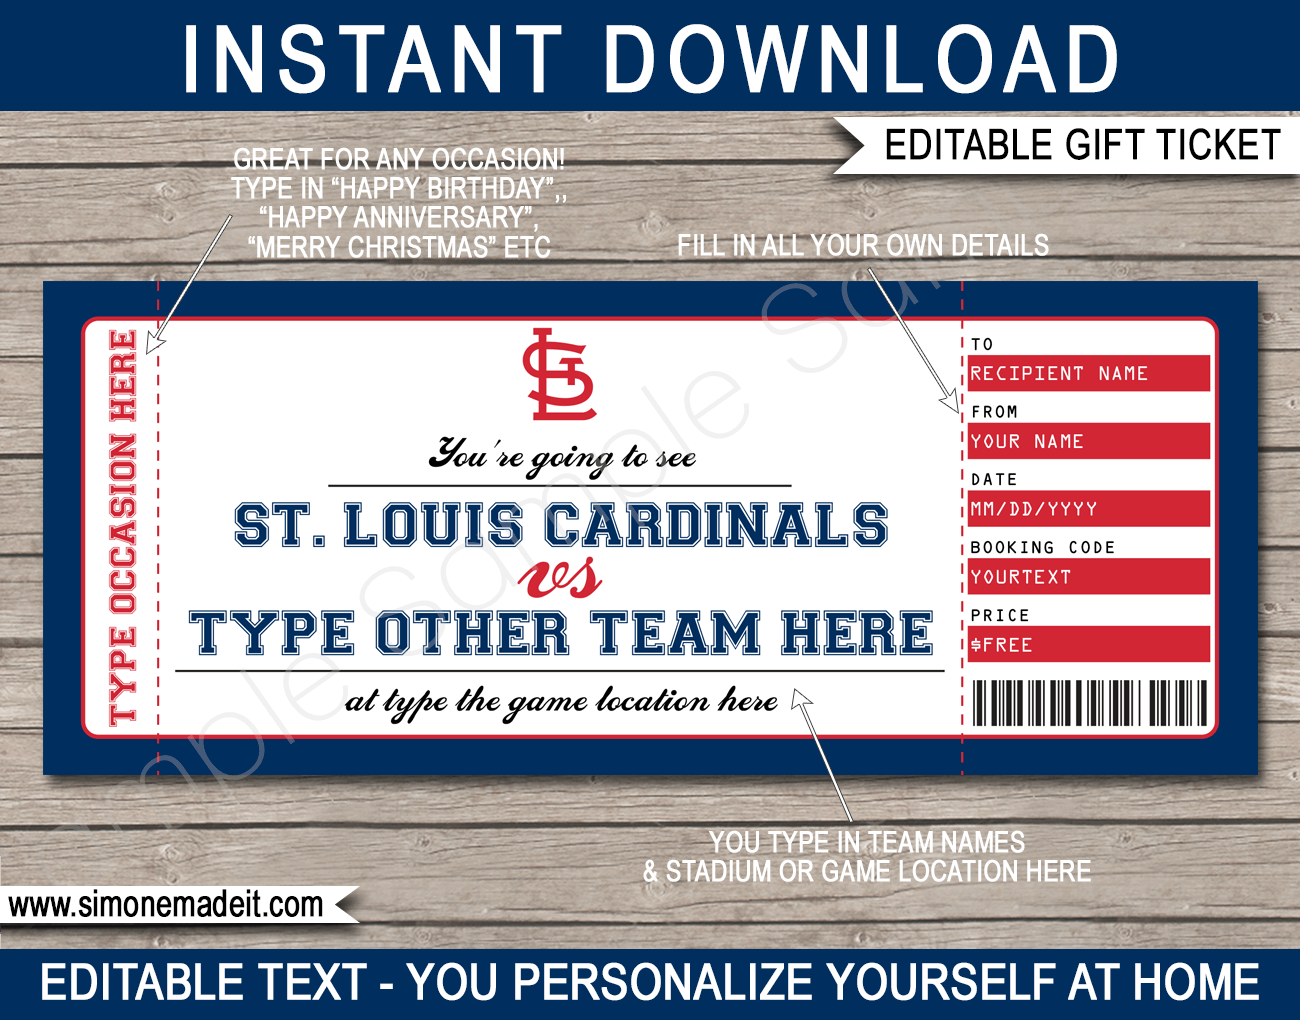 St. Louis Cardinals Game Ticket Gift Voucher